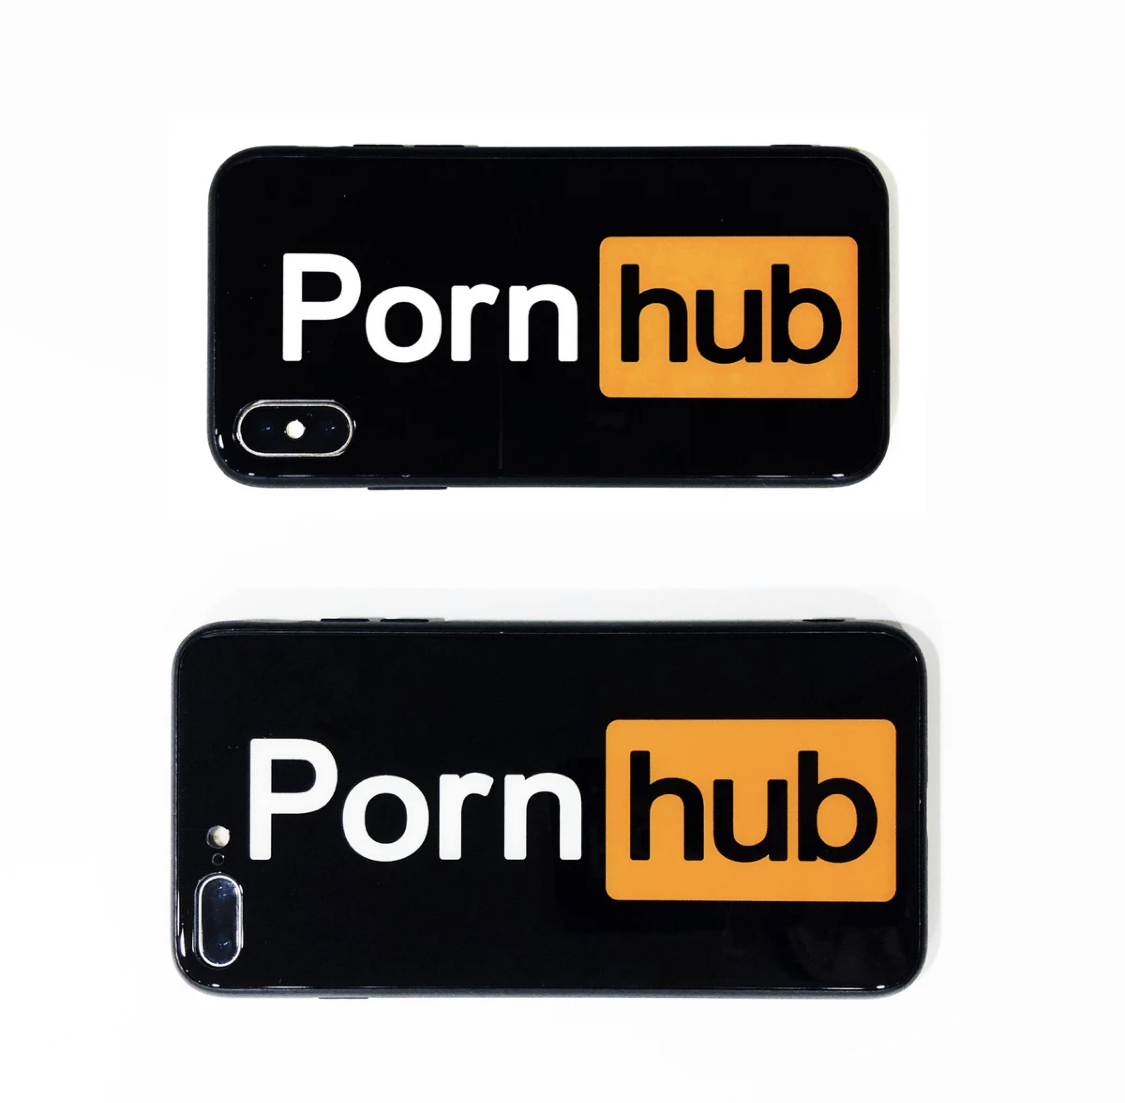 iPhone porno hub